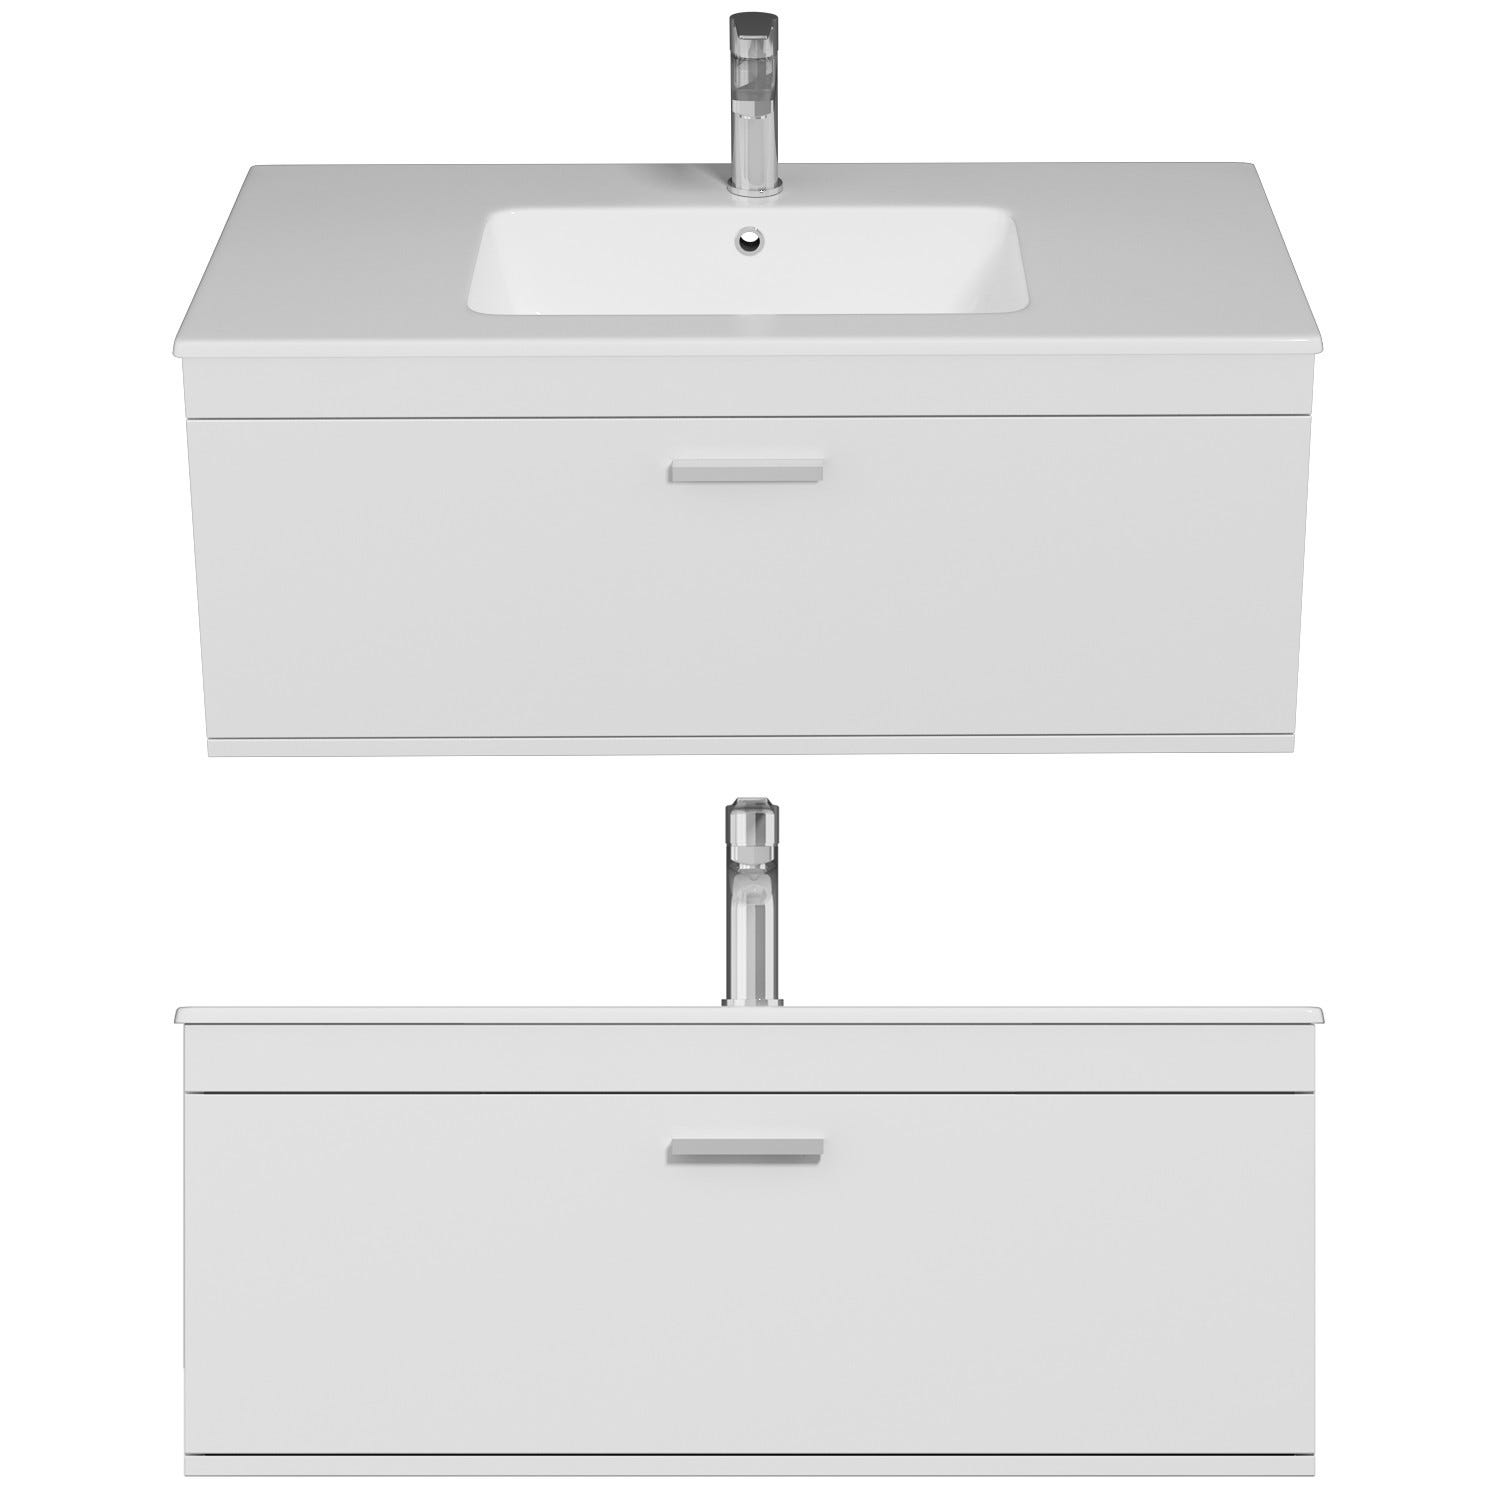 RUBITE Meuble salle de bain simple vasque 1 tiroir blanc largeur 100 cm 3